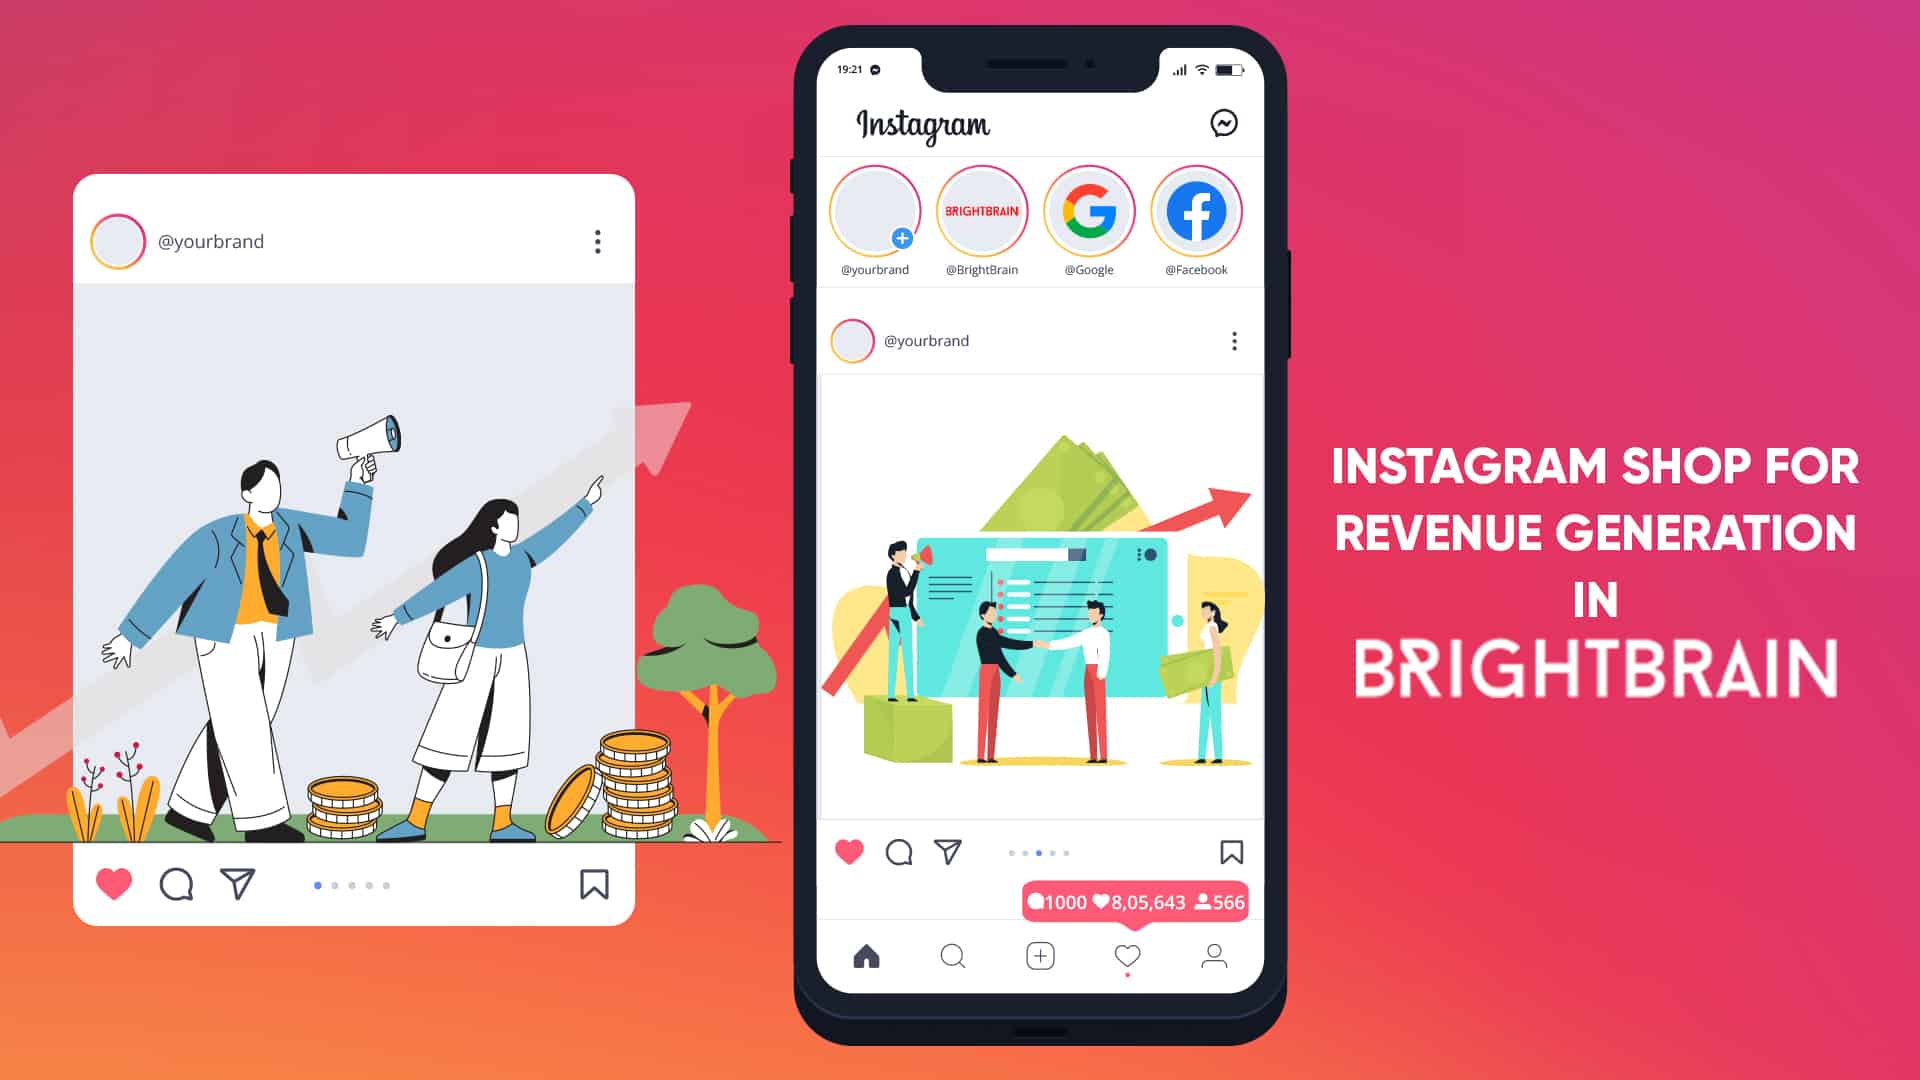 Instagram Shop for Revenue Generation by BrightBrain